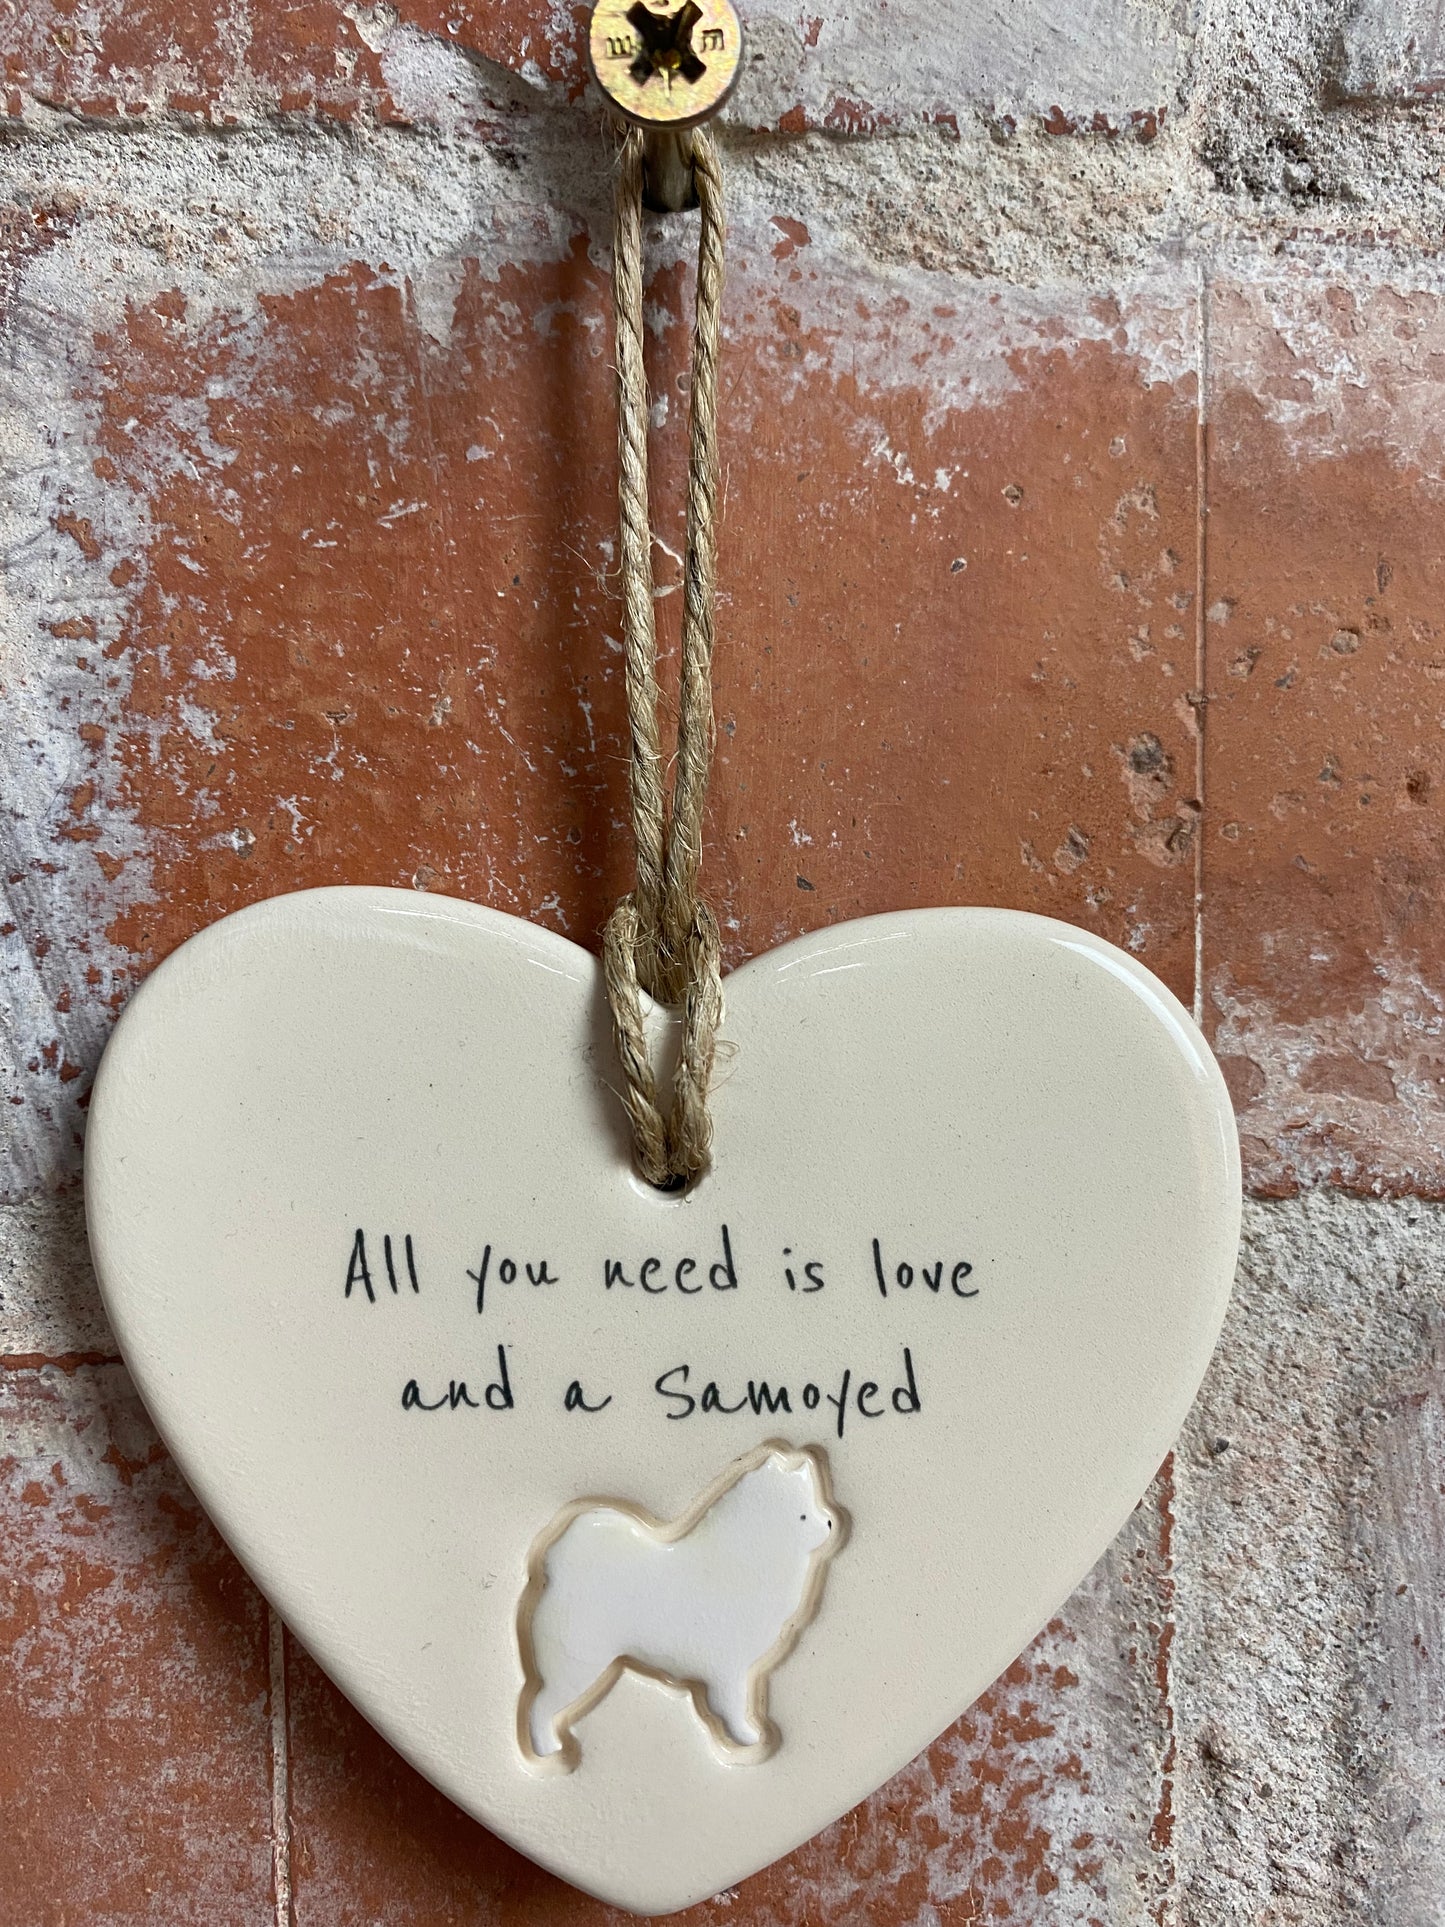 Samoyed ceramic heart